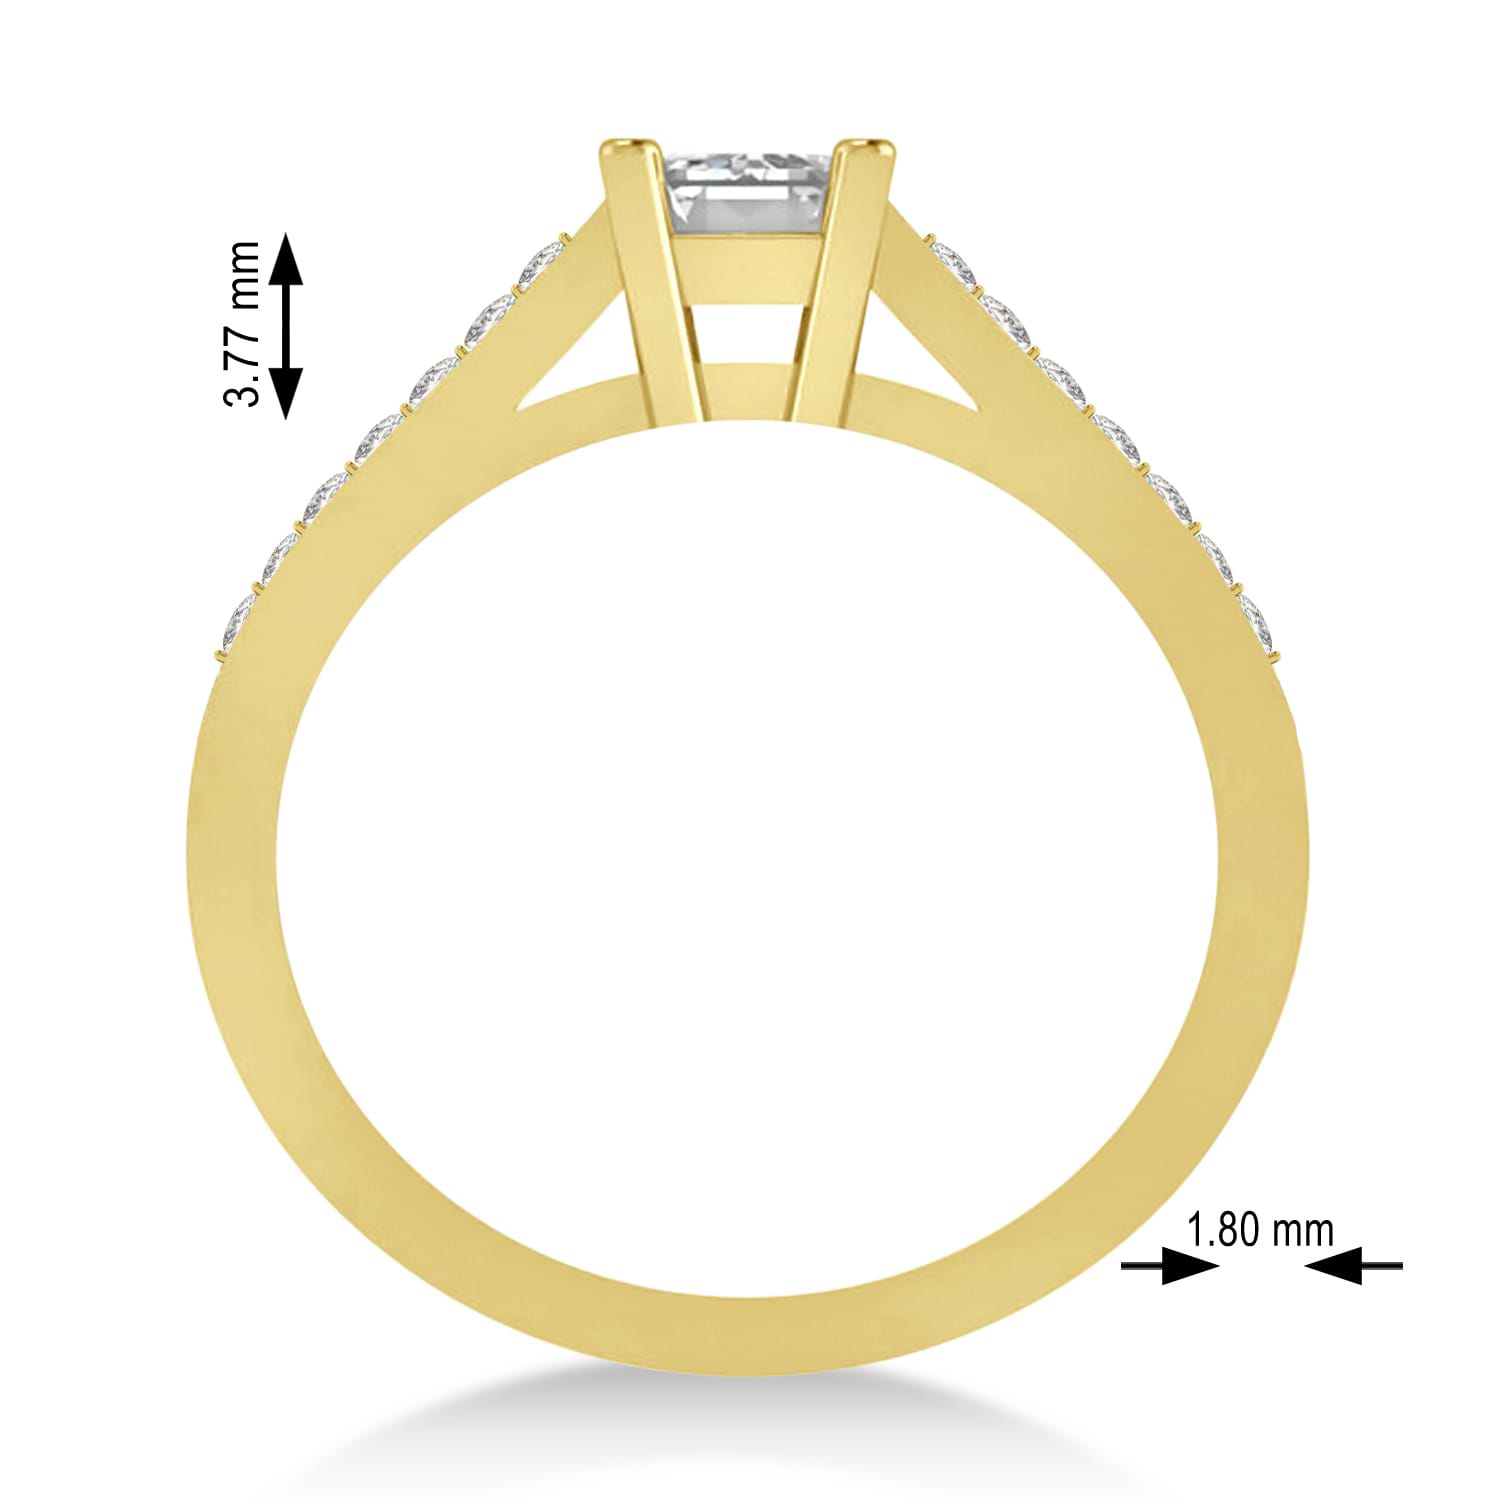 Emerald-Cut Diamond Pre-Set Engagement Ring 14k Yellow Gold (1.09ct)